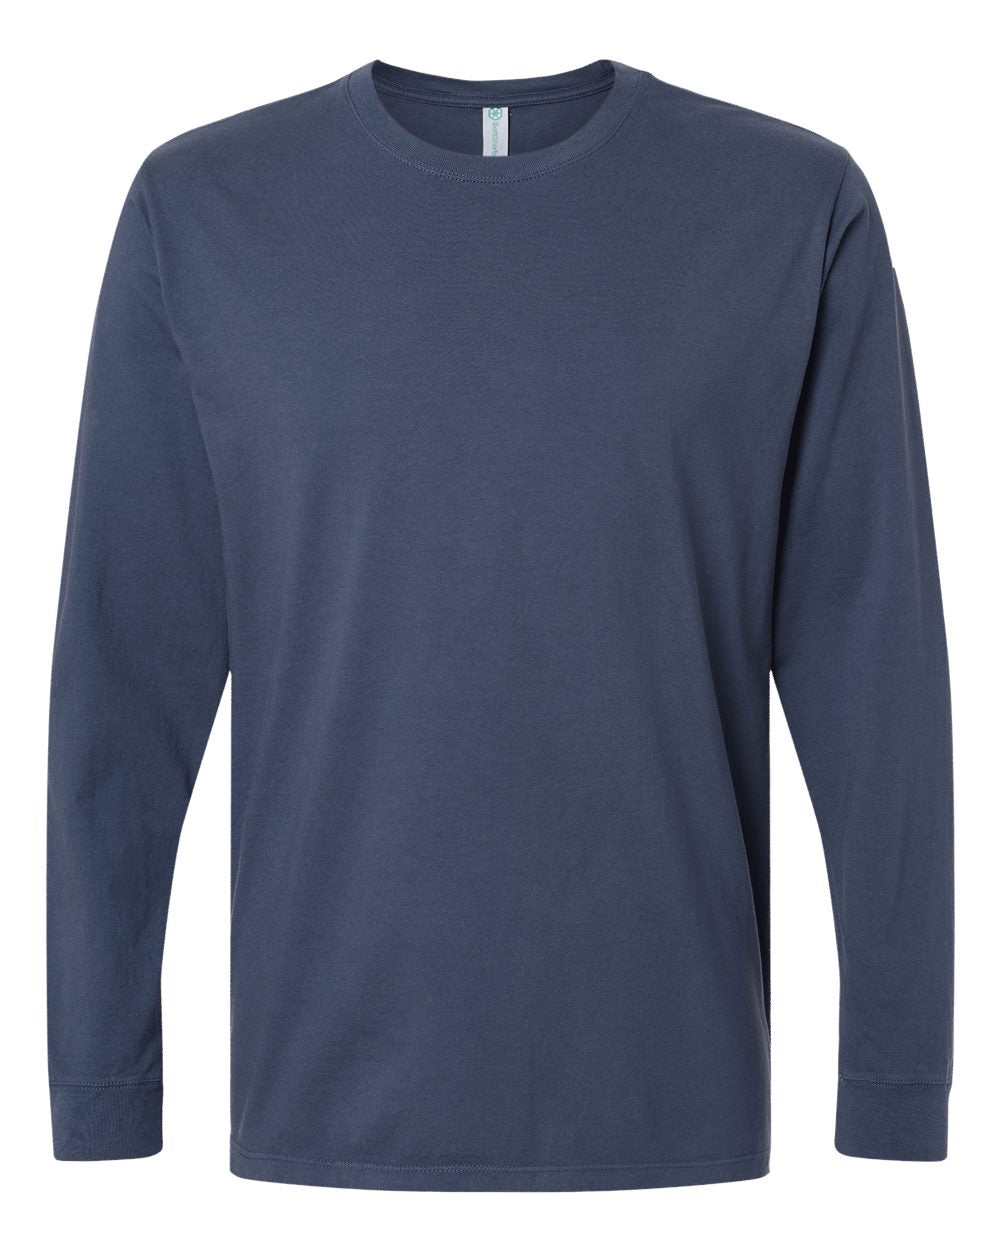 Softshirts® Unisex Organic Cotton Long-Sleeve Shirt in navy